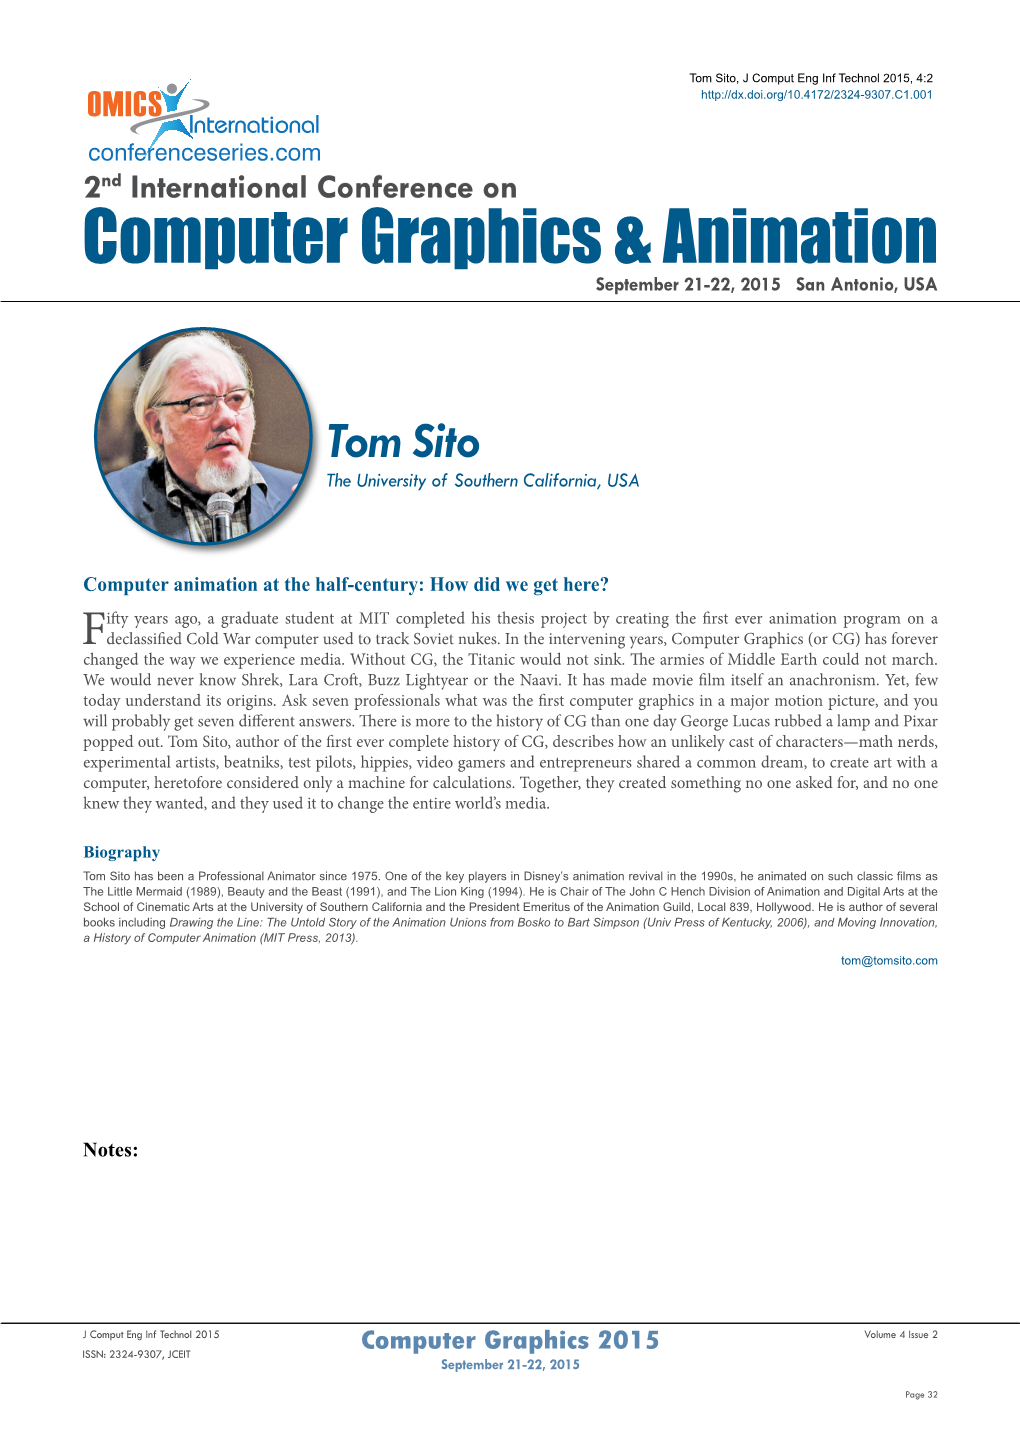 Computer Graphics & Animation